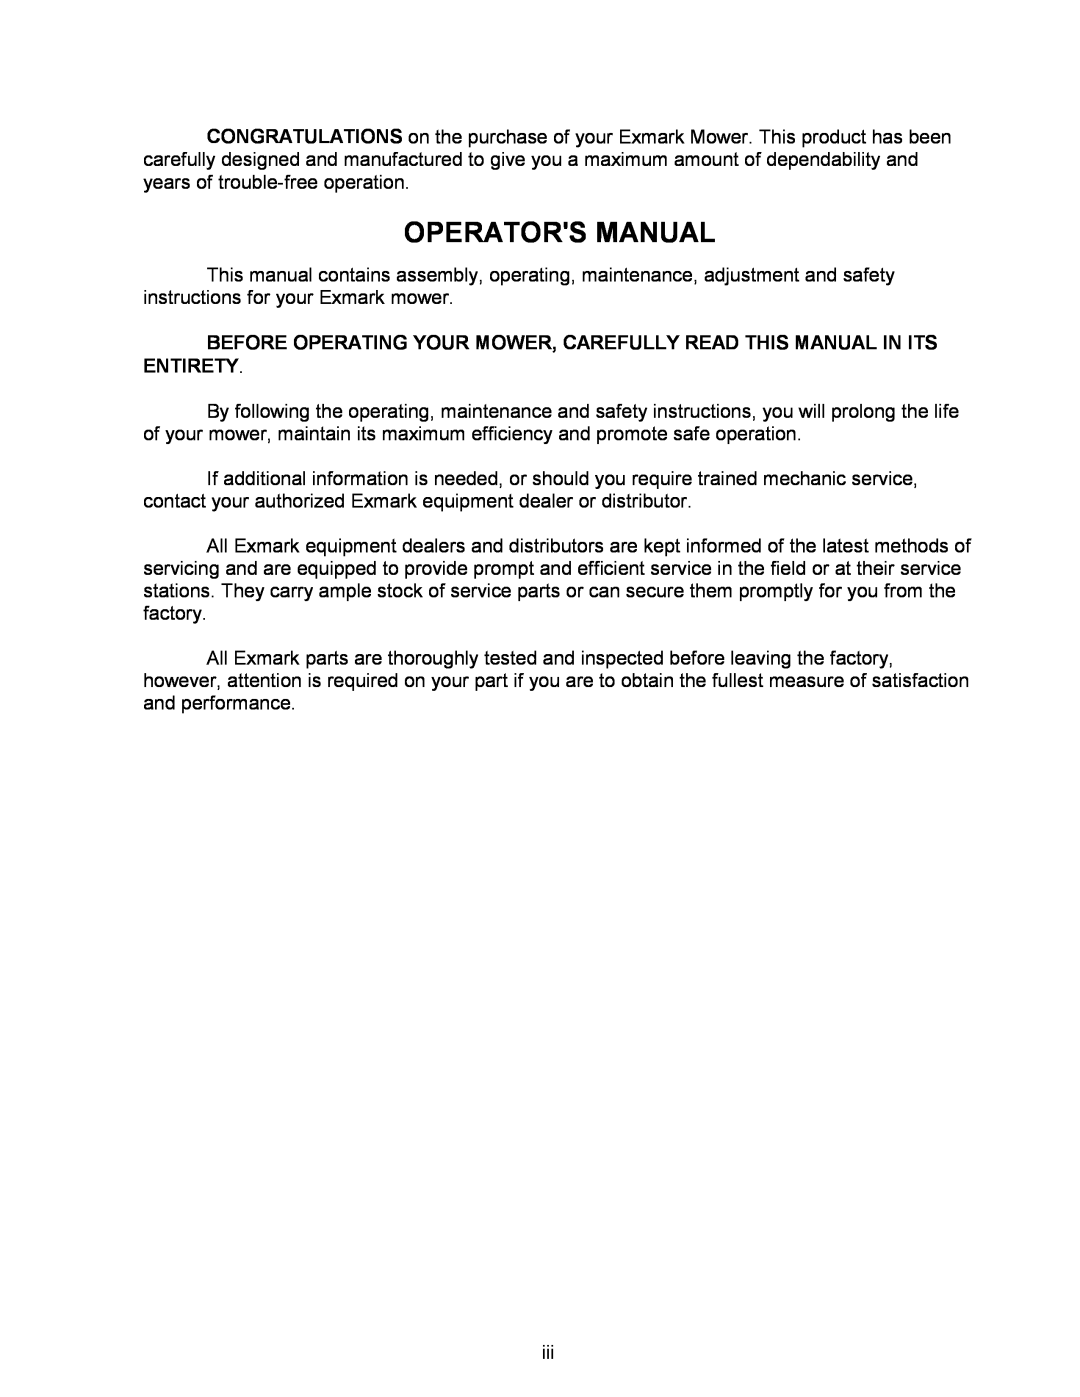 Exmark Metro manual Operators Manual 